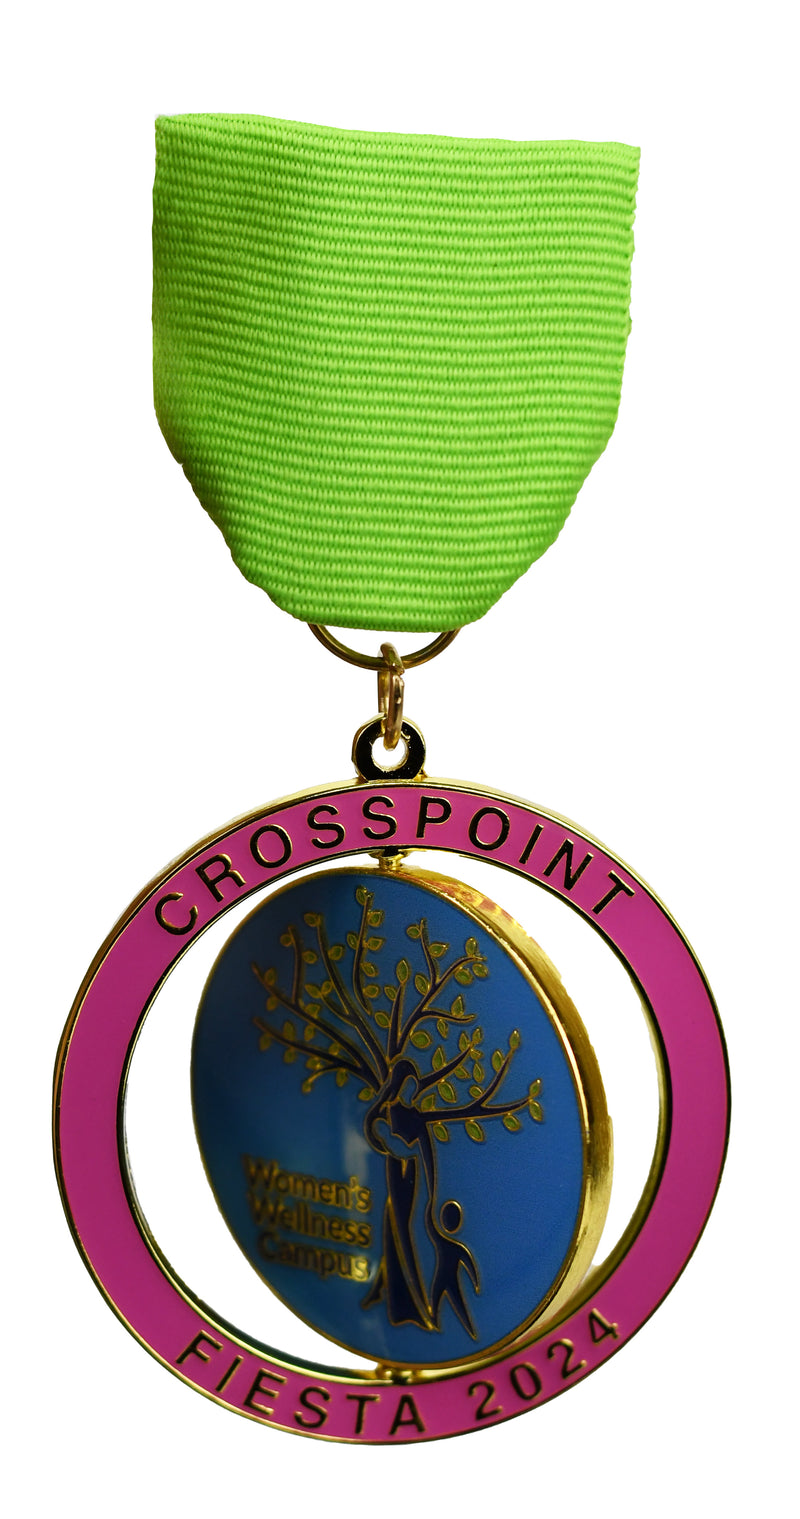 Crosspoint Women's Wellness Campus Medal